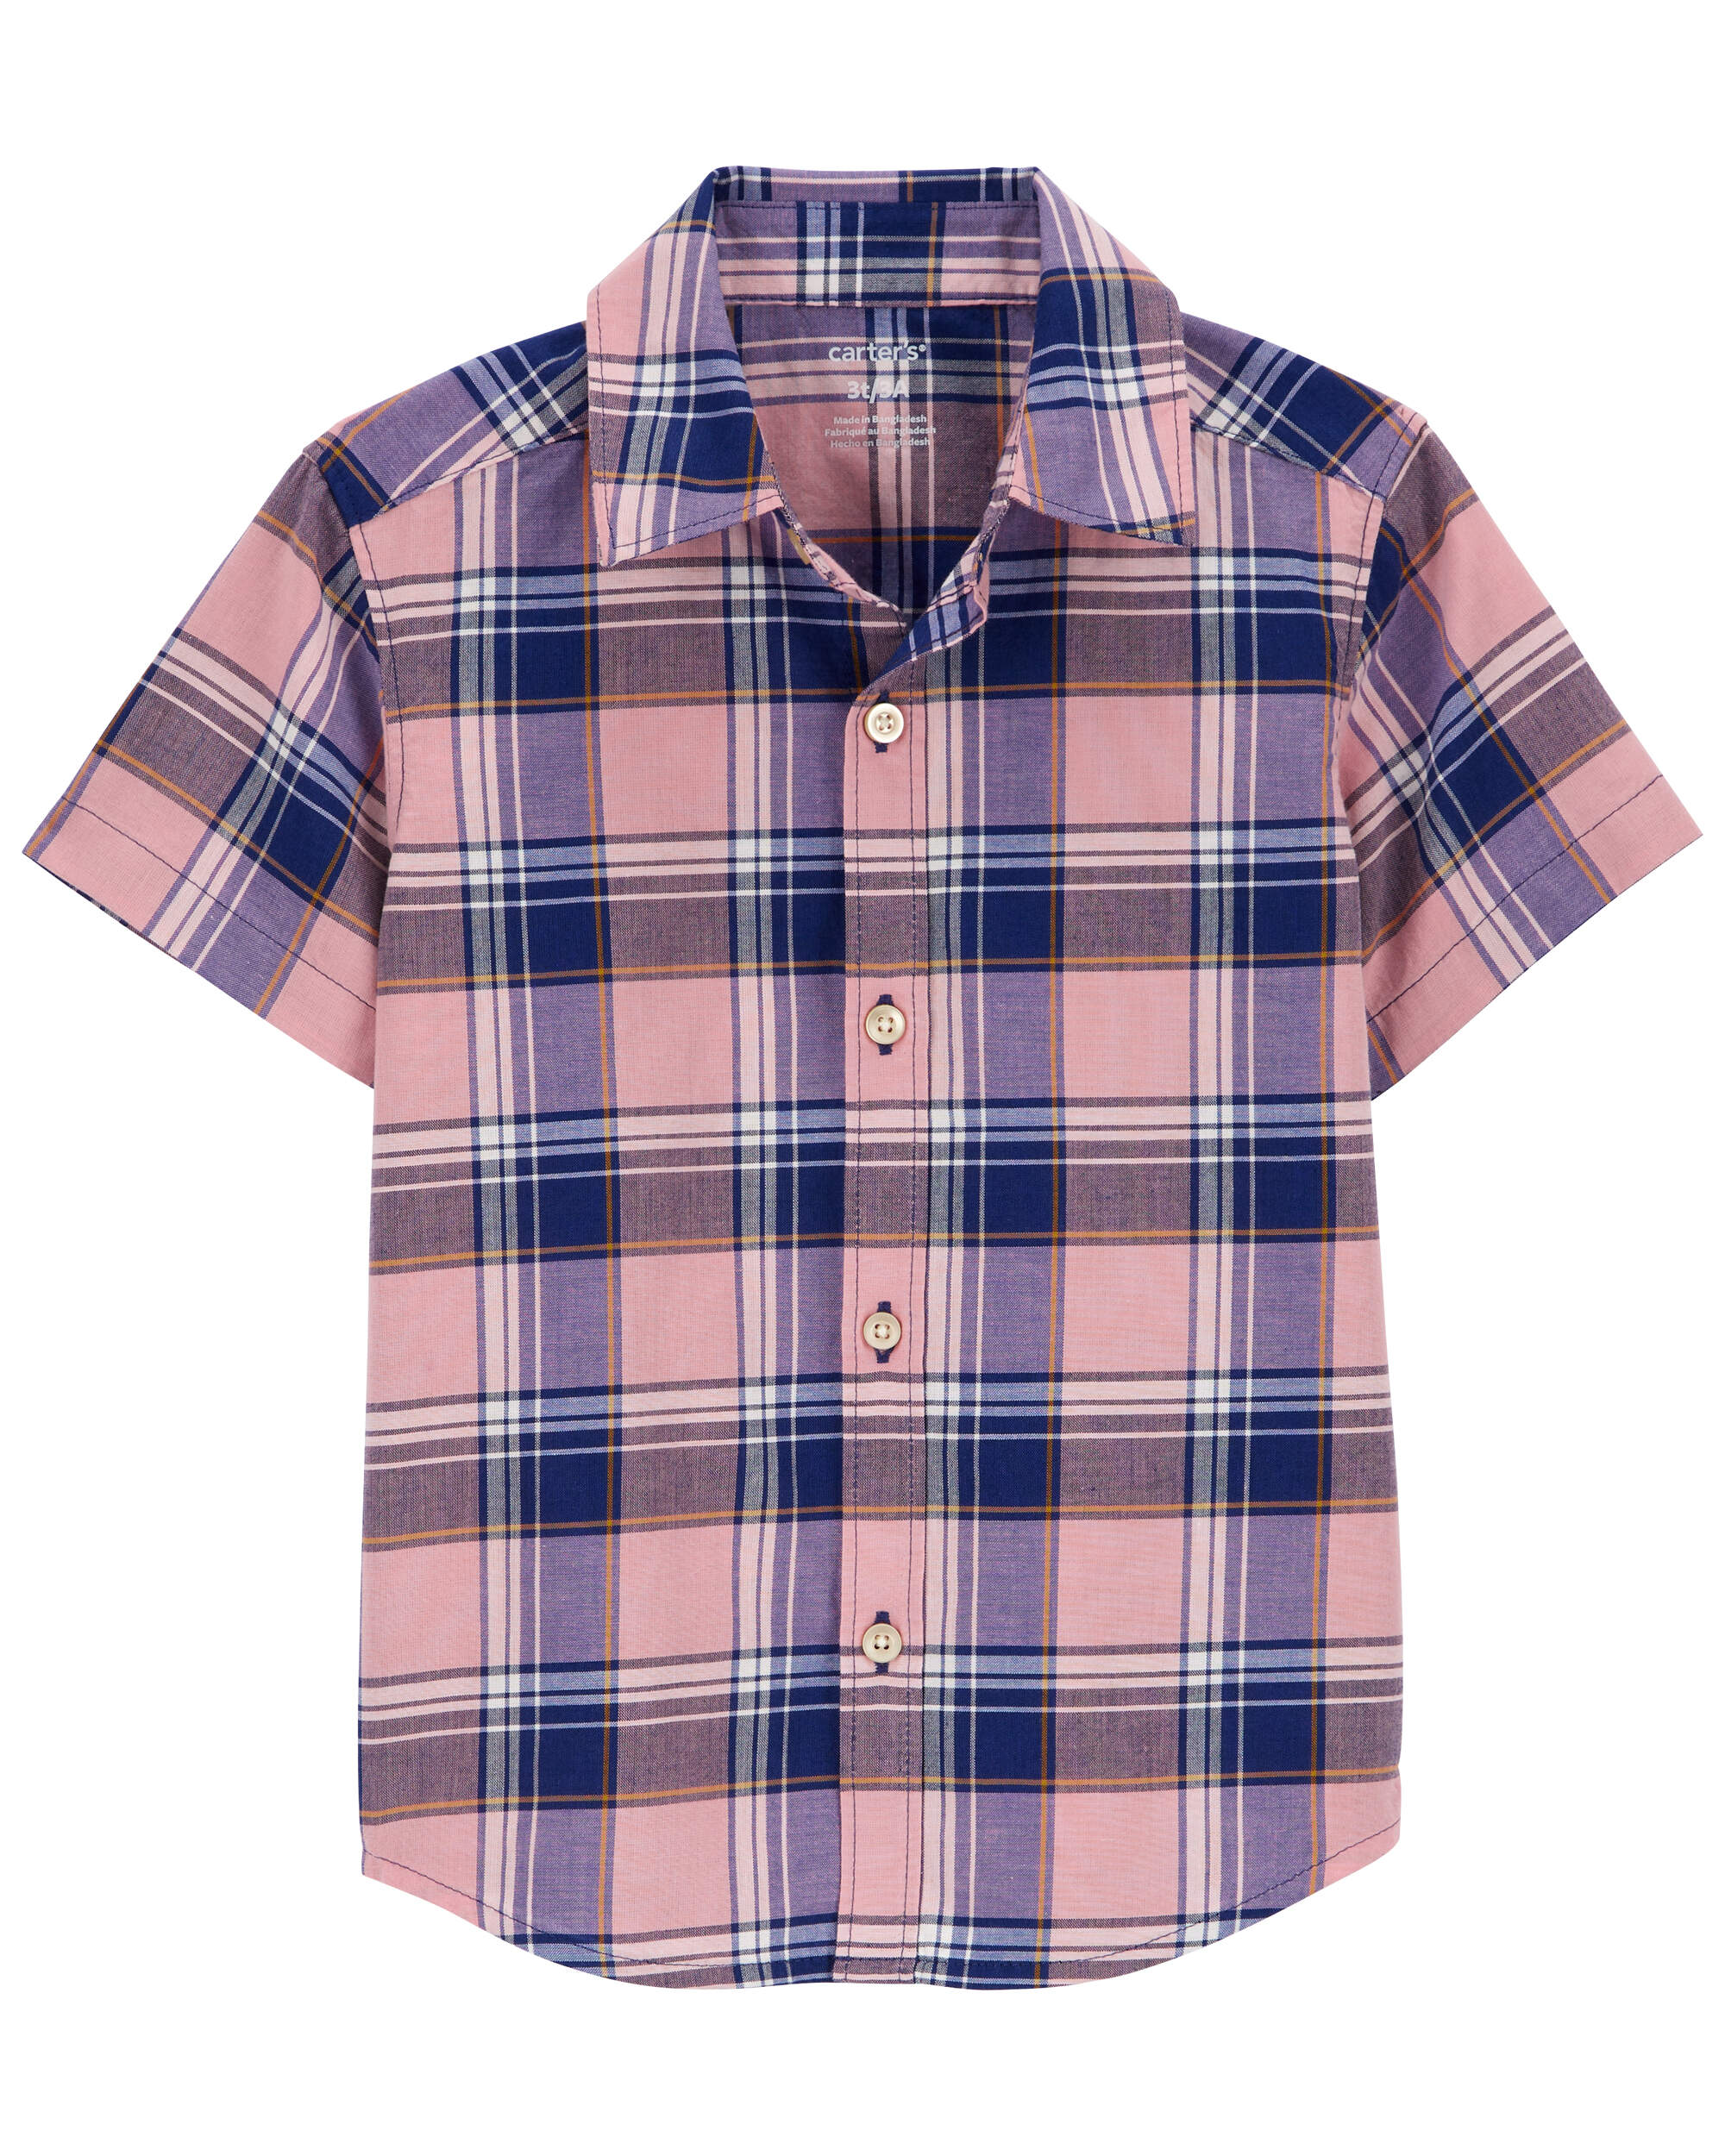 Toddler Plaid Button-Down Shirt